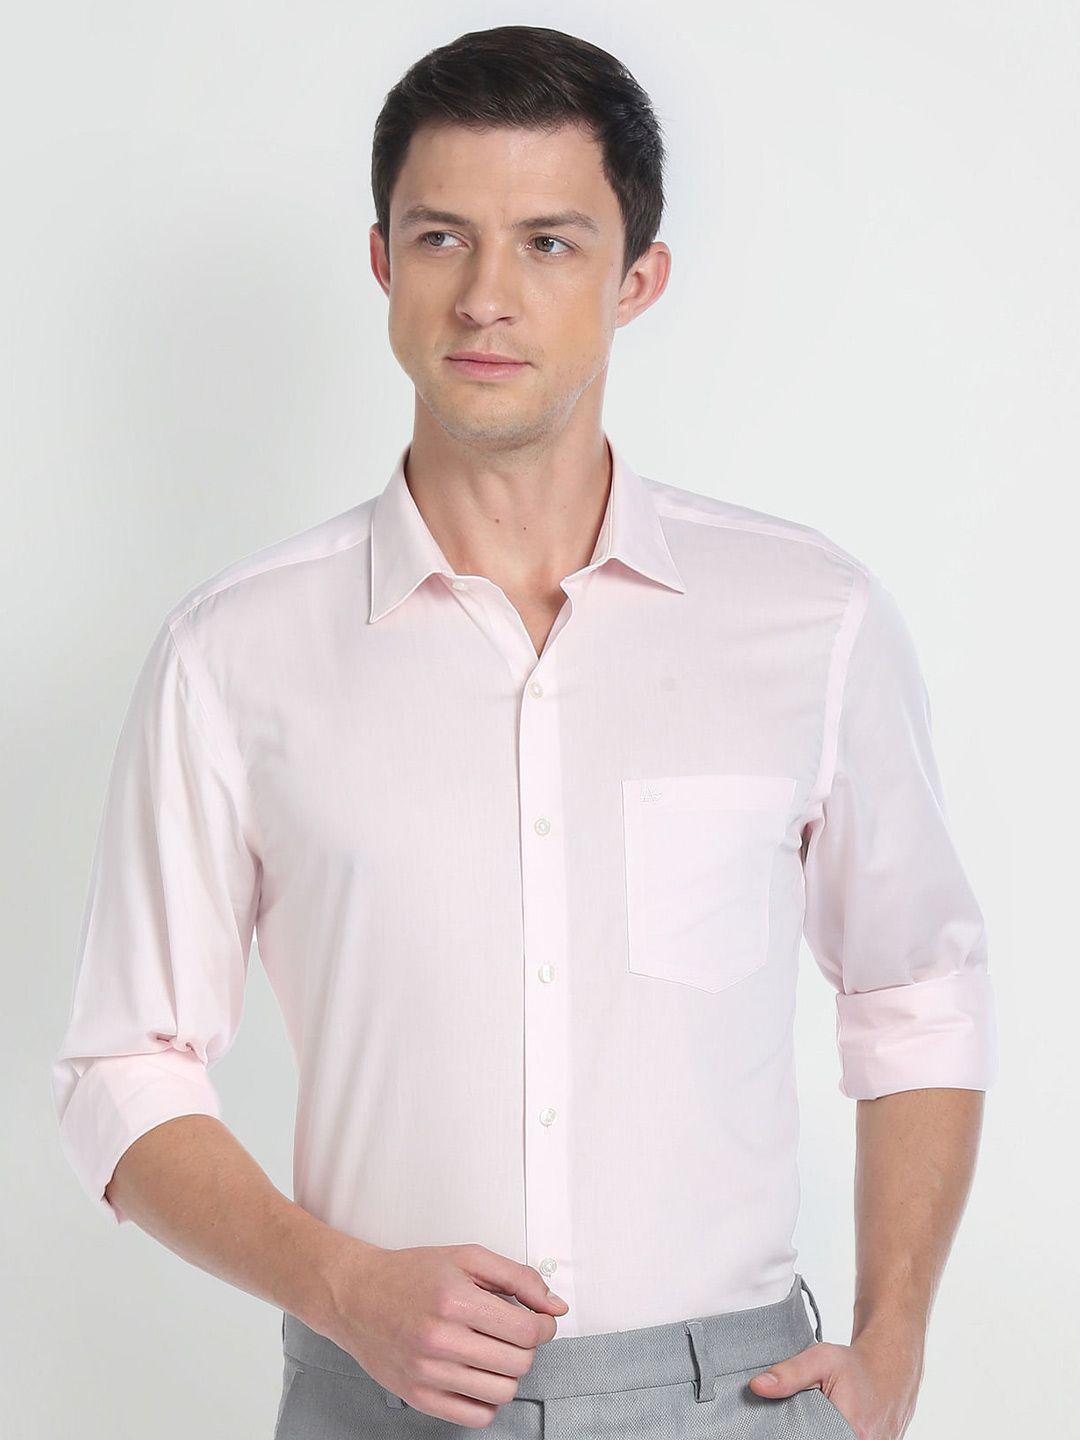 Arrow Spread Collar Pure Cotton Formal Shirt